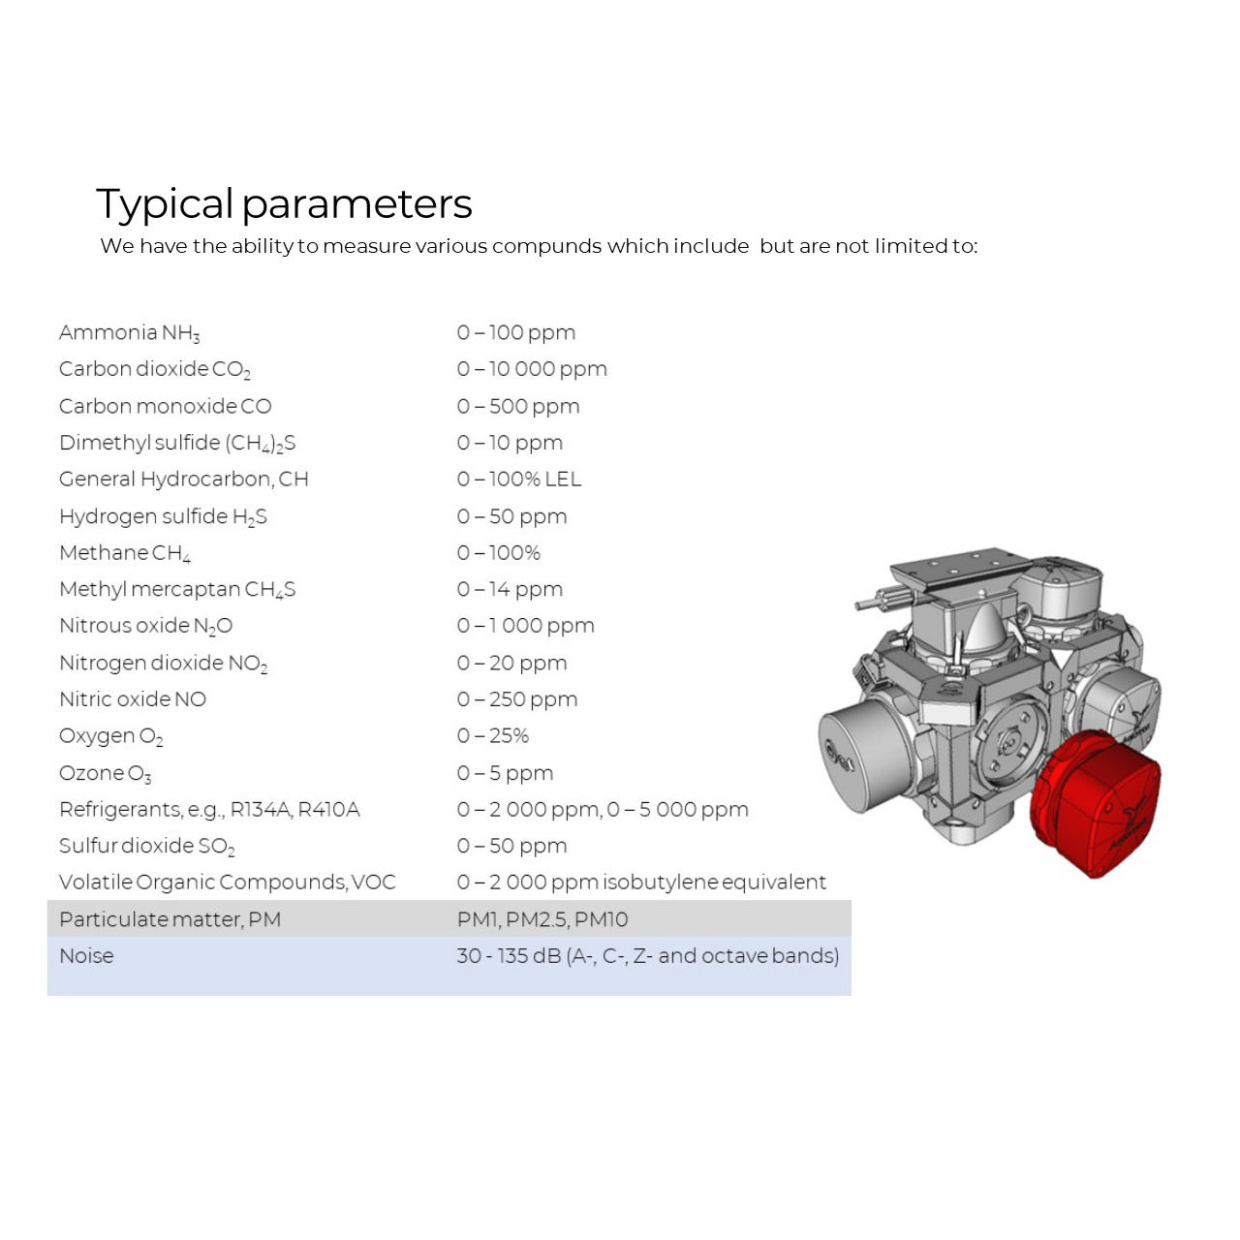 Aeromon's typical measured parameters